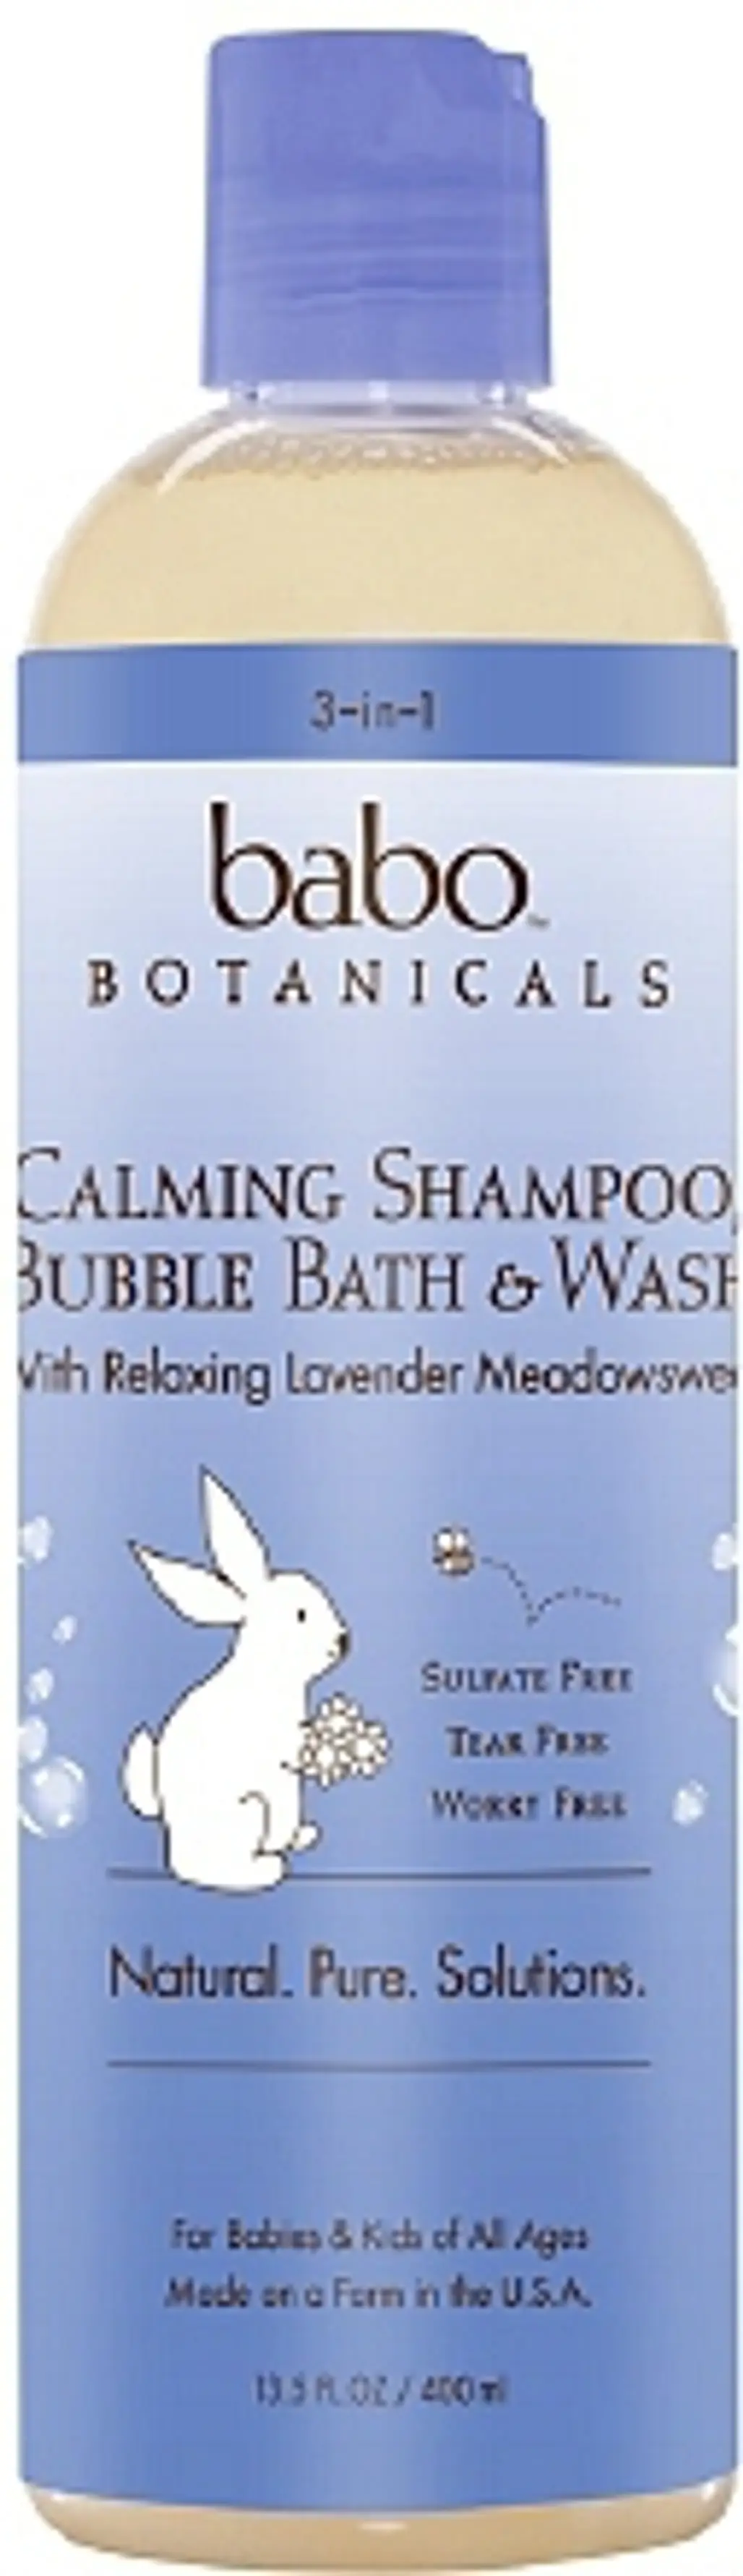 Babo Botanicals 3 in 1: Bubble Bath & Shampoo & Wash